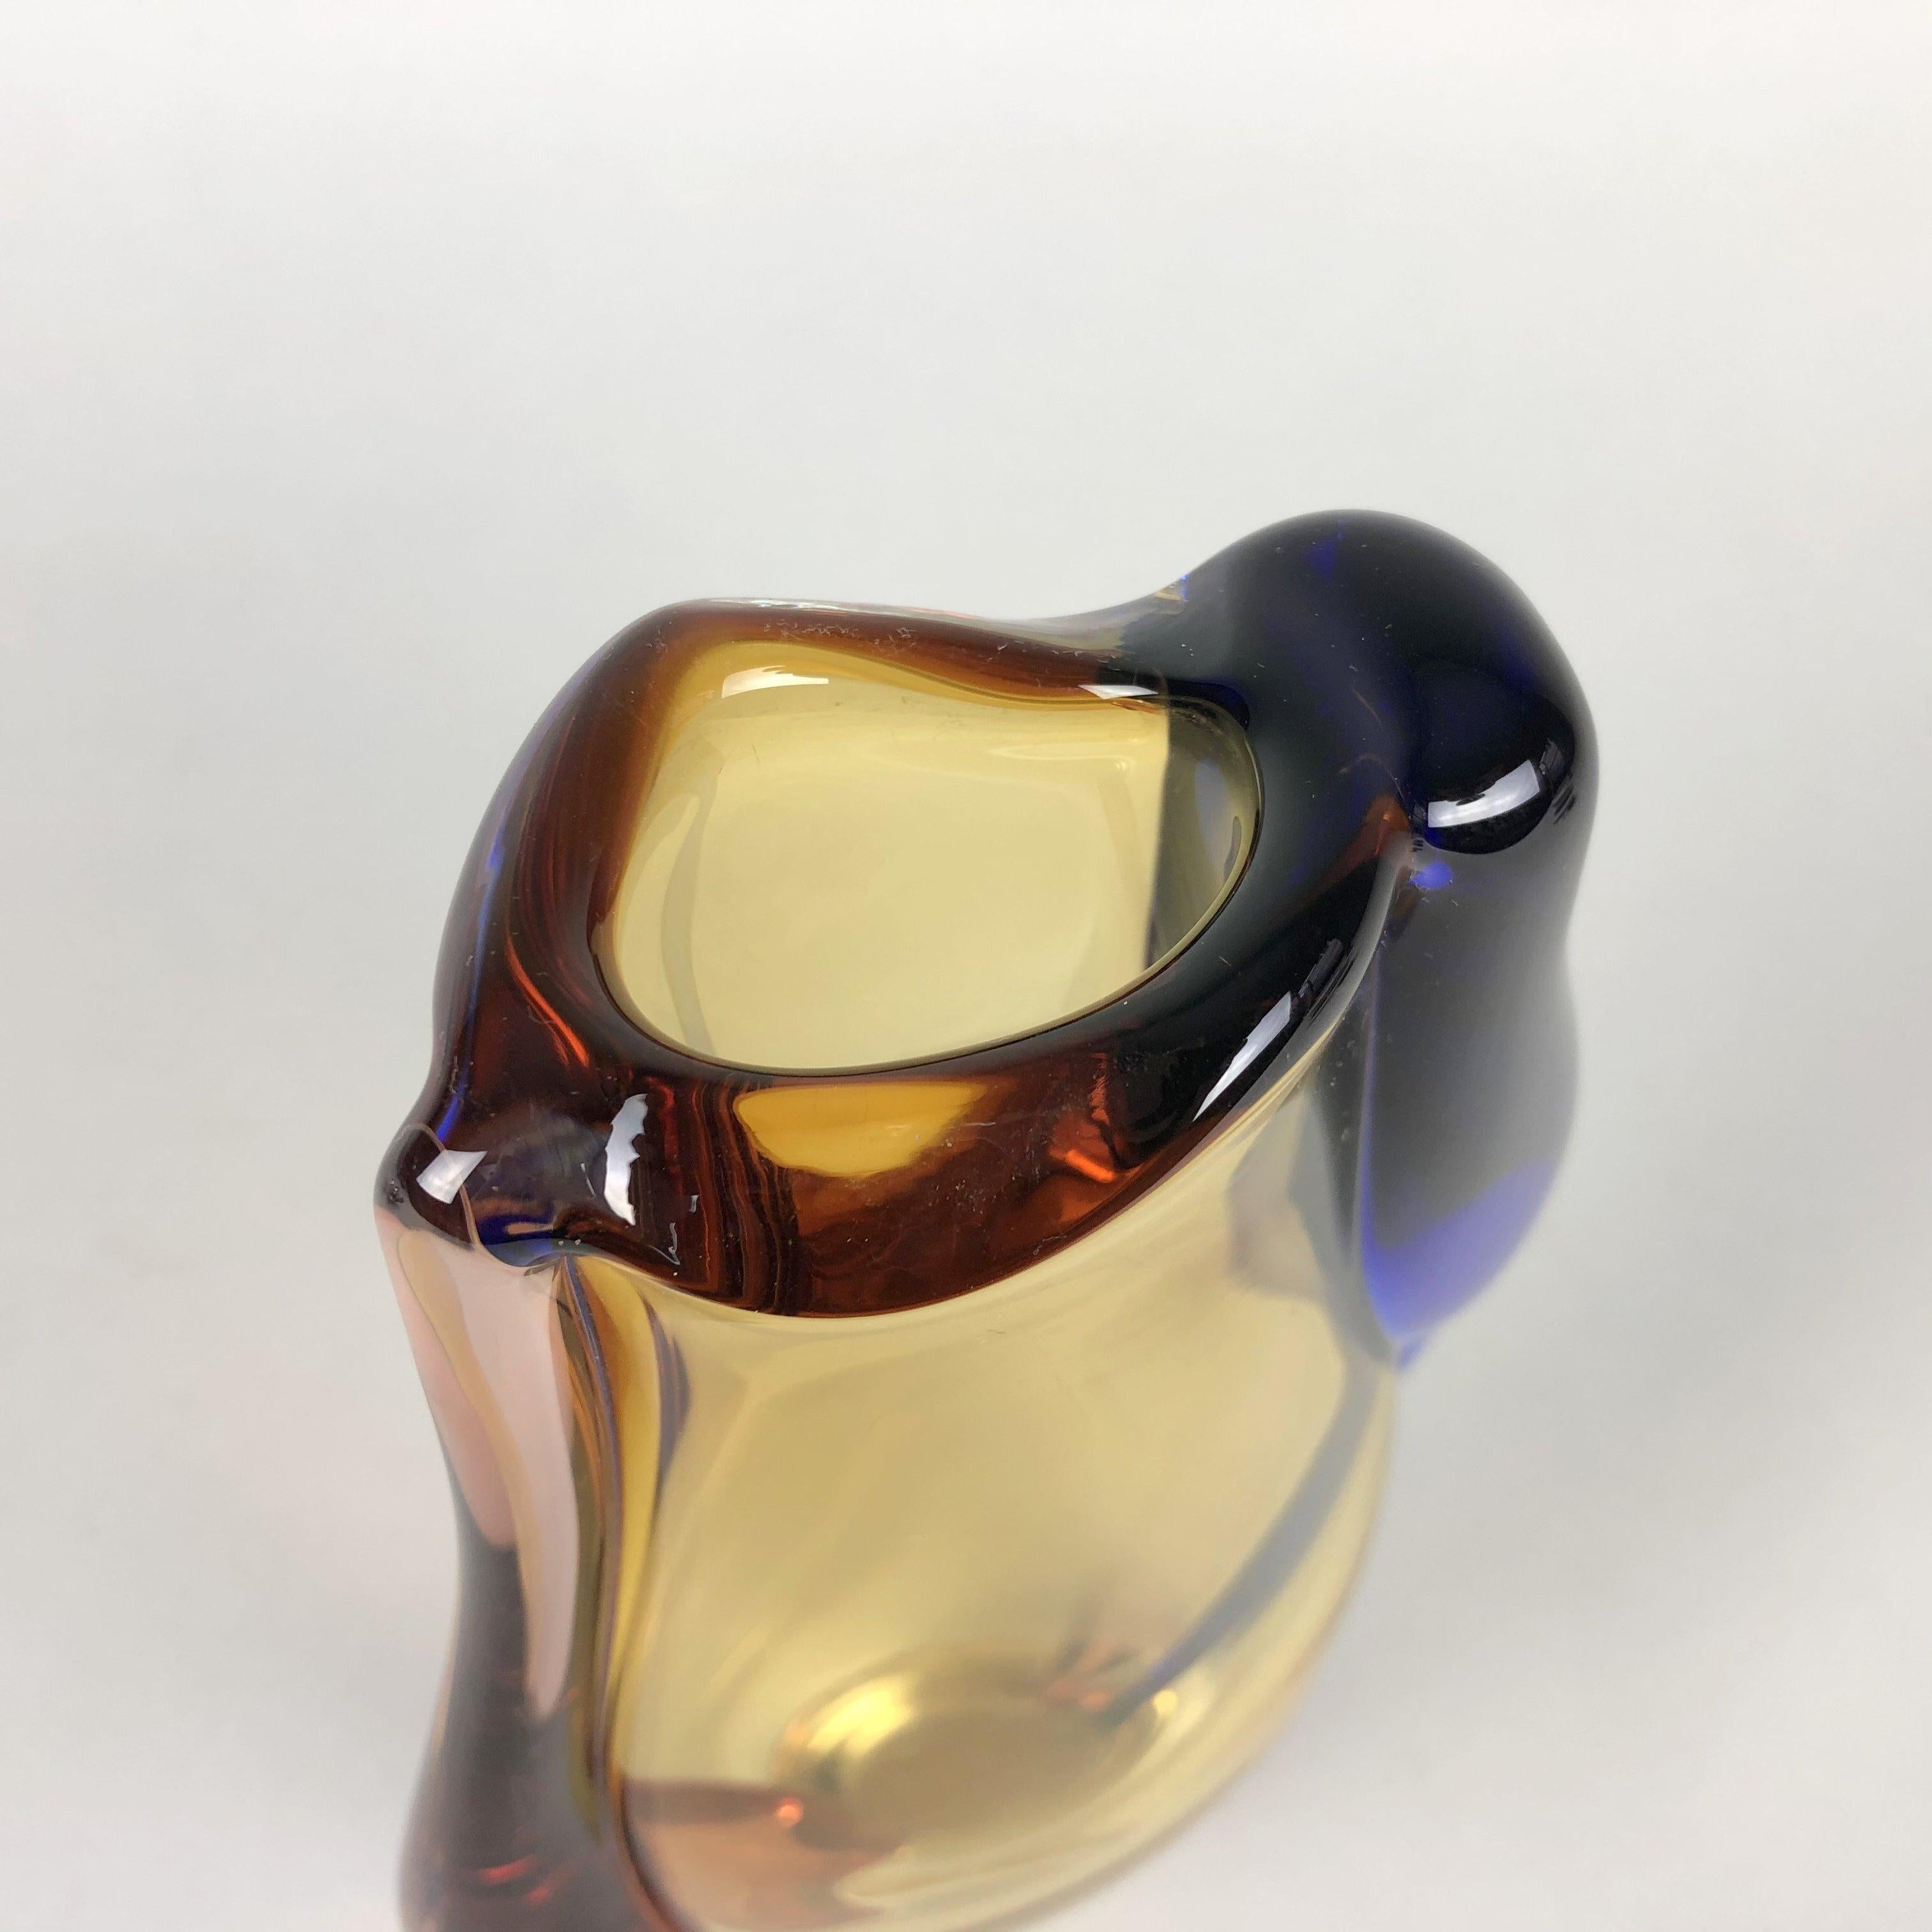 Mid-20th Century Art Glass Vase by Hana Machovska for Mstisov Glassworks, Czechoslovakia, 1960s For Sale